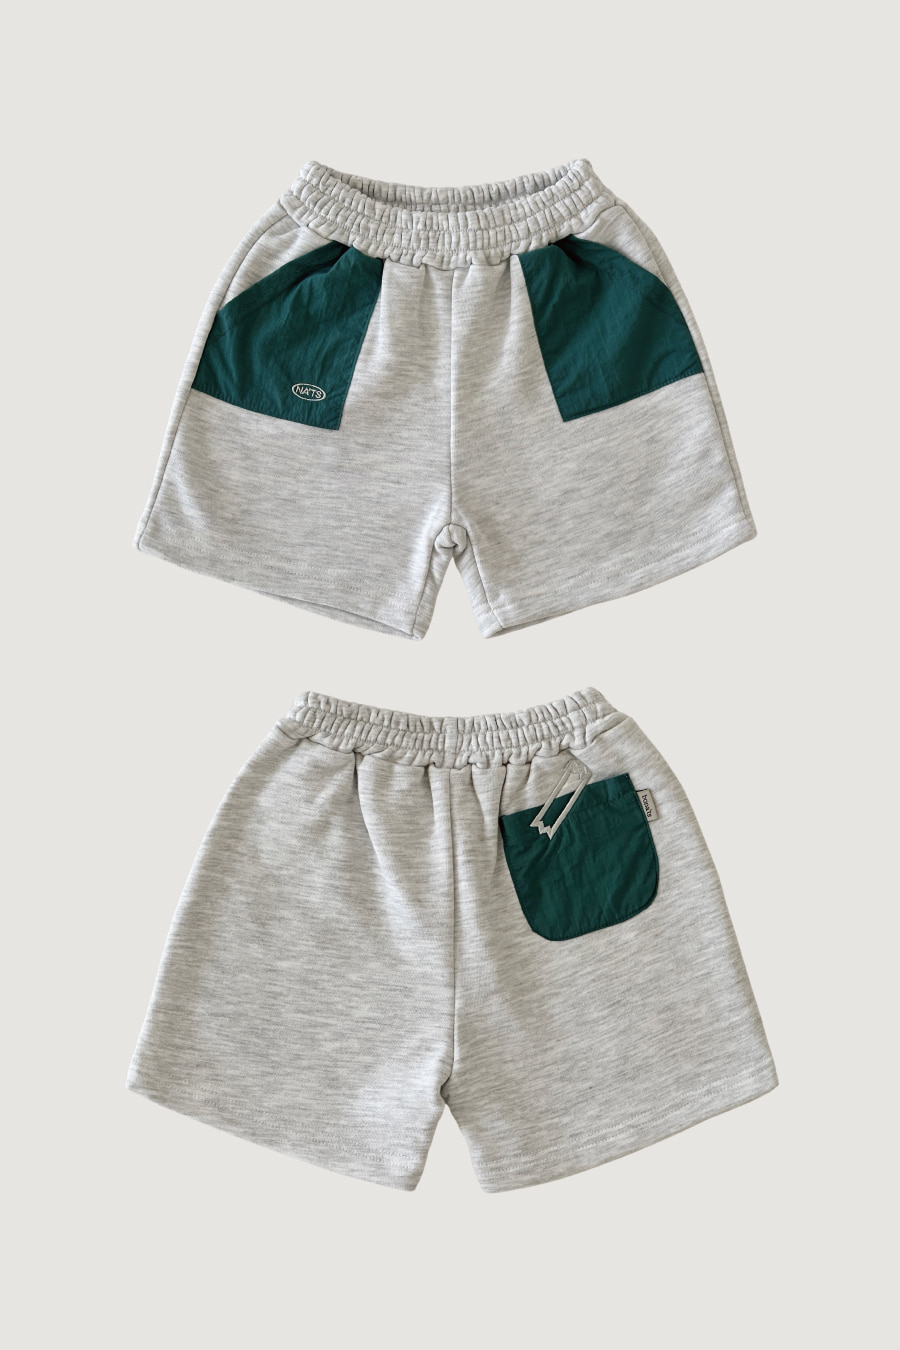 Nats nylon Coloring sweat shorts (Melange)